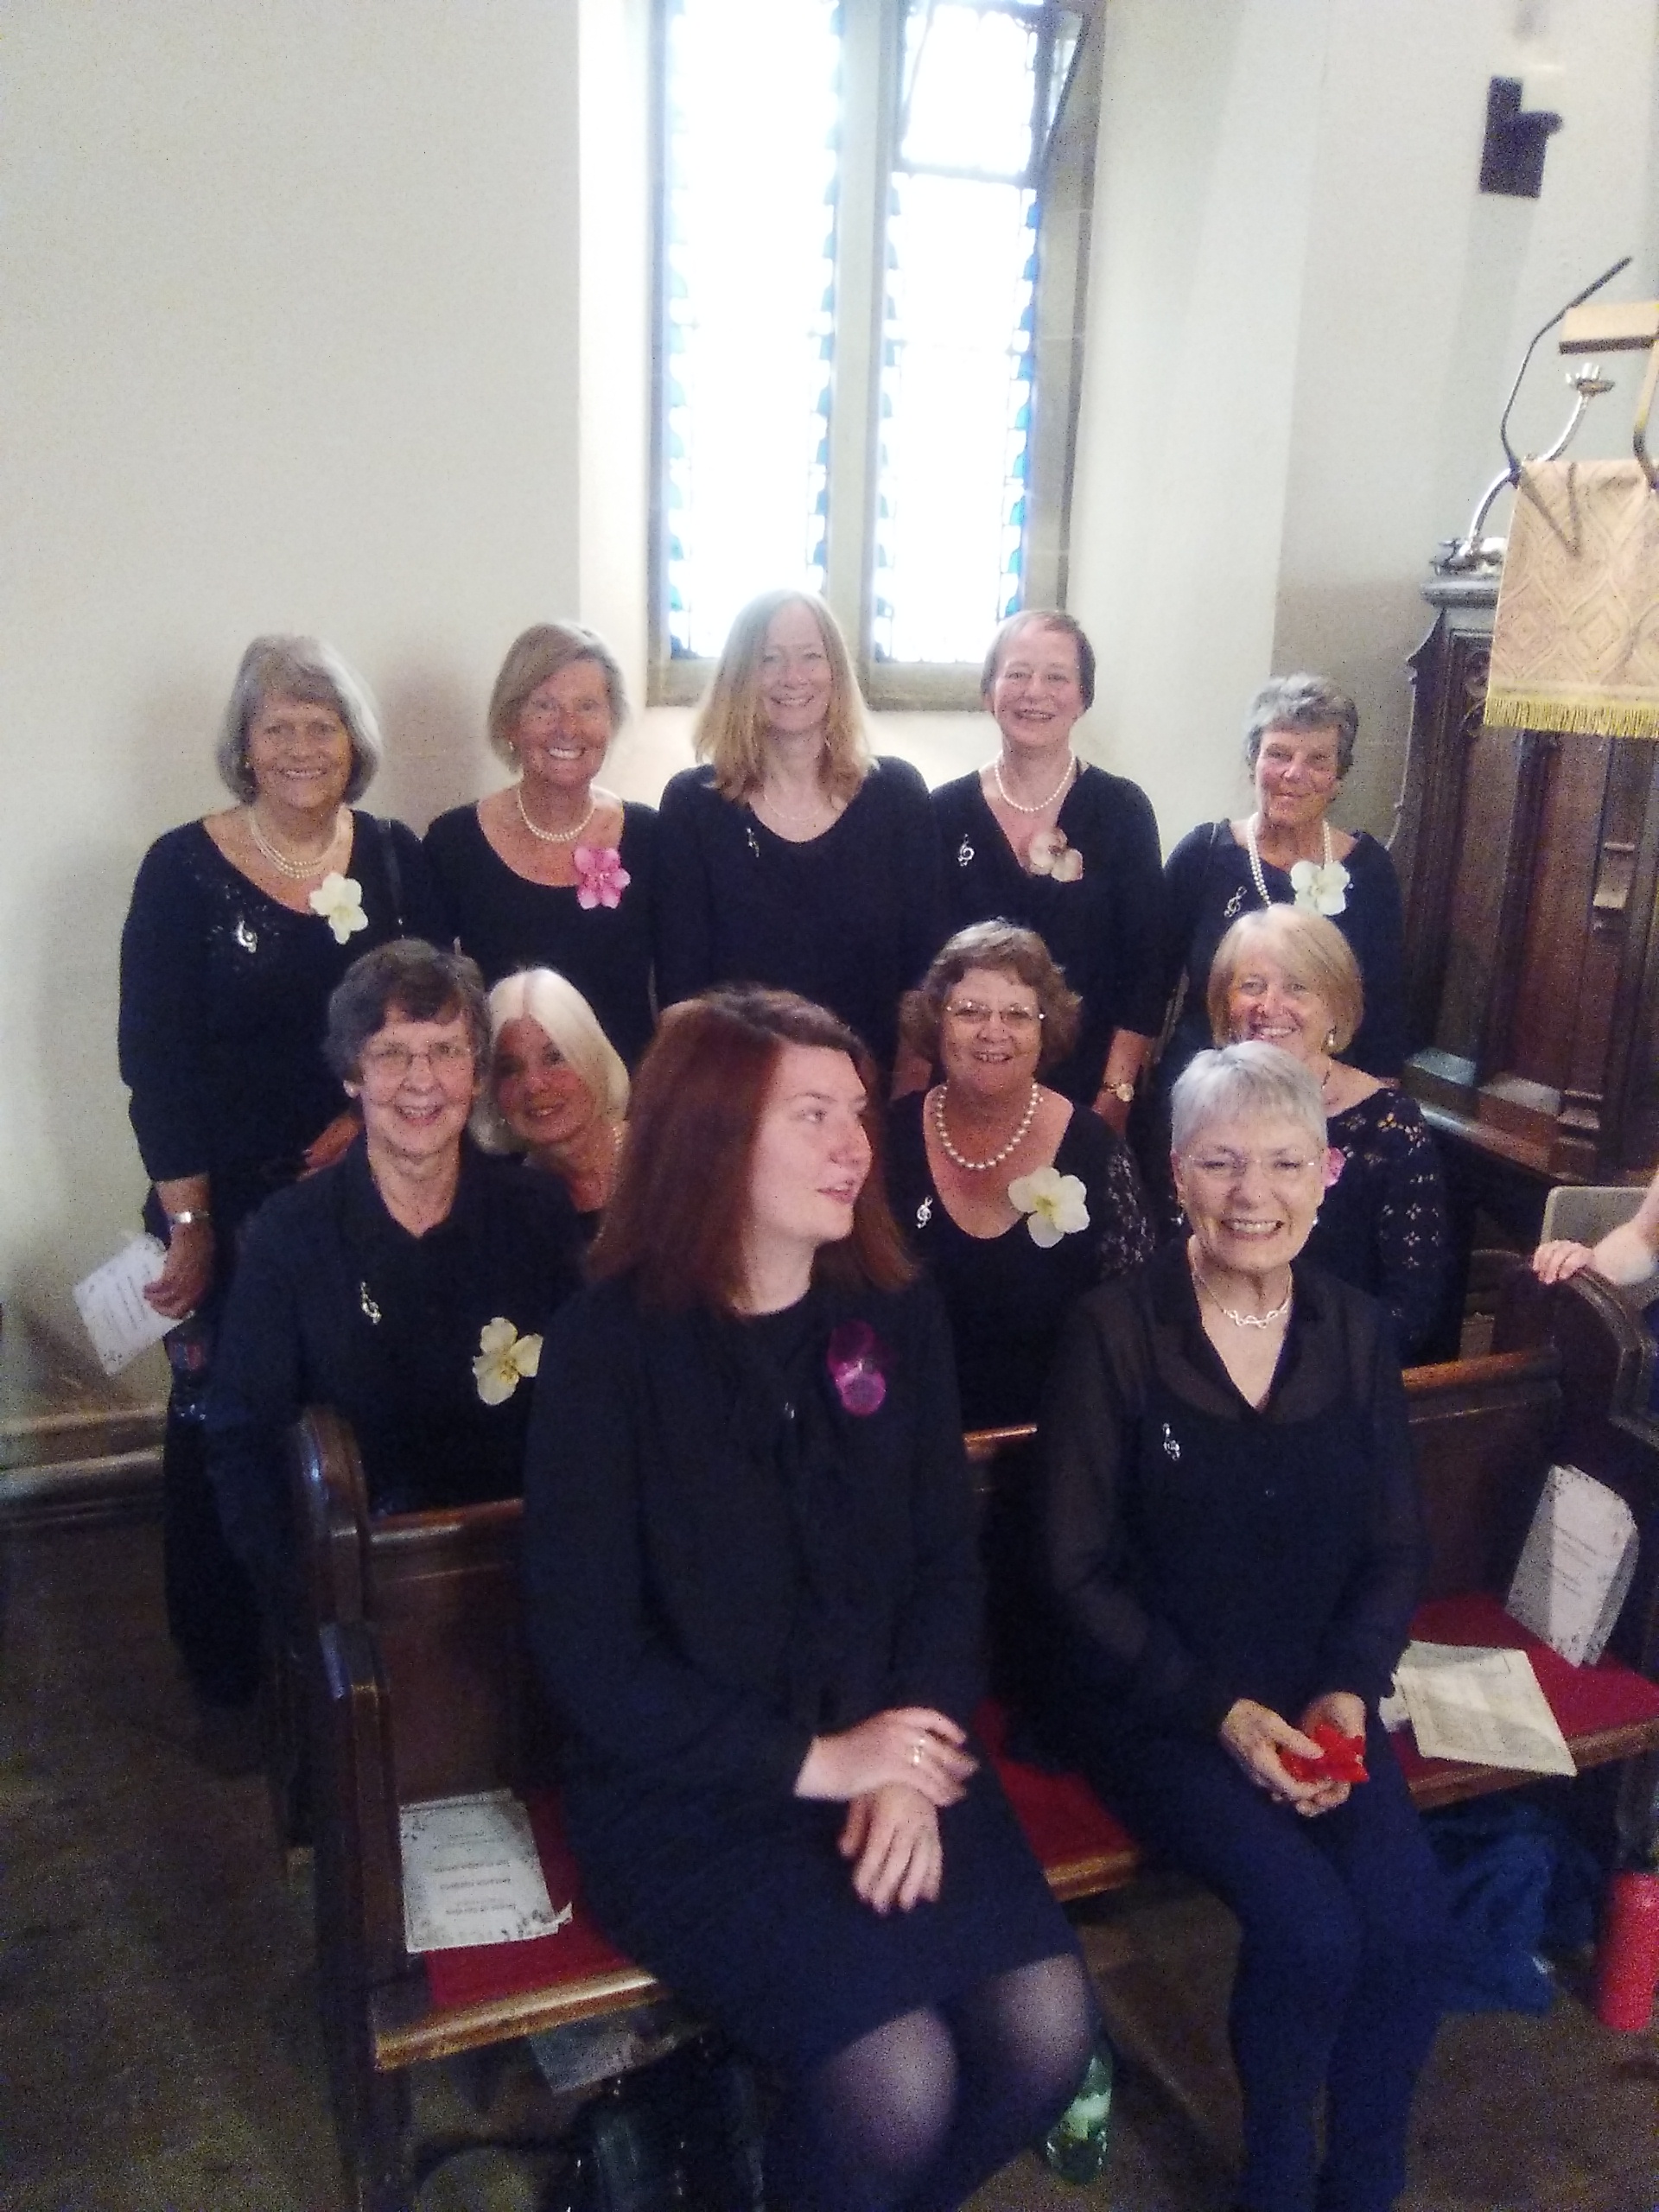 North Ferriby Ladies Choir - Waiting for the bride and groom at Ellerker Church